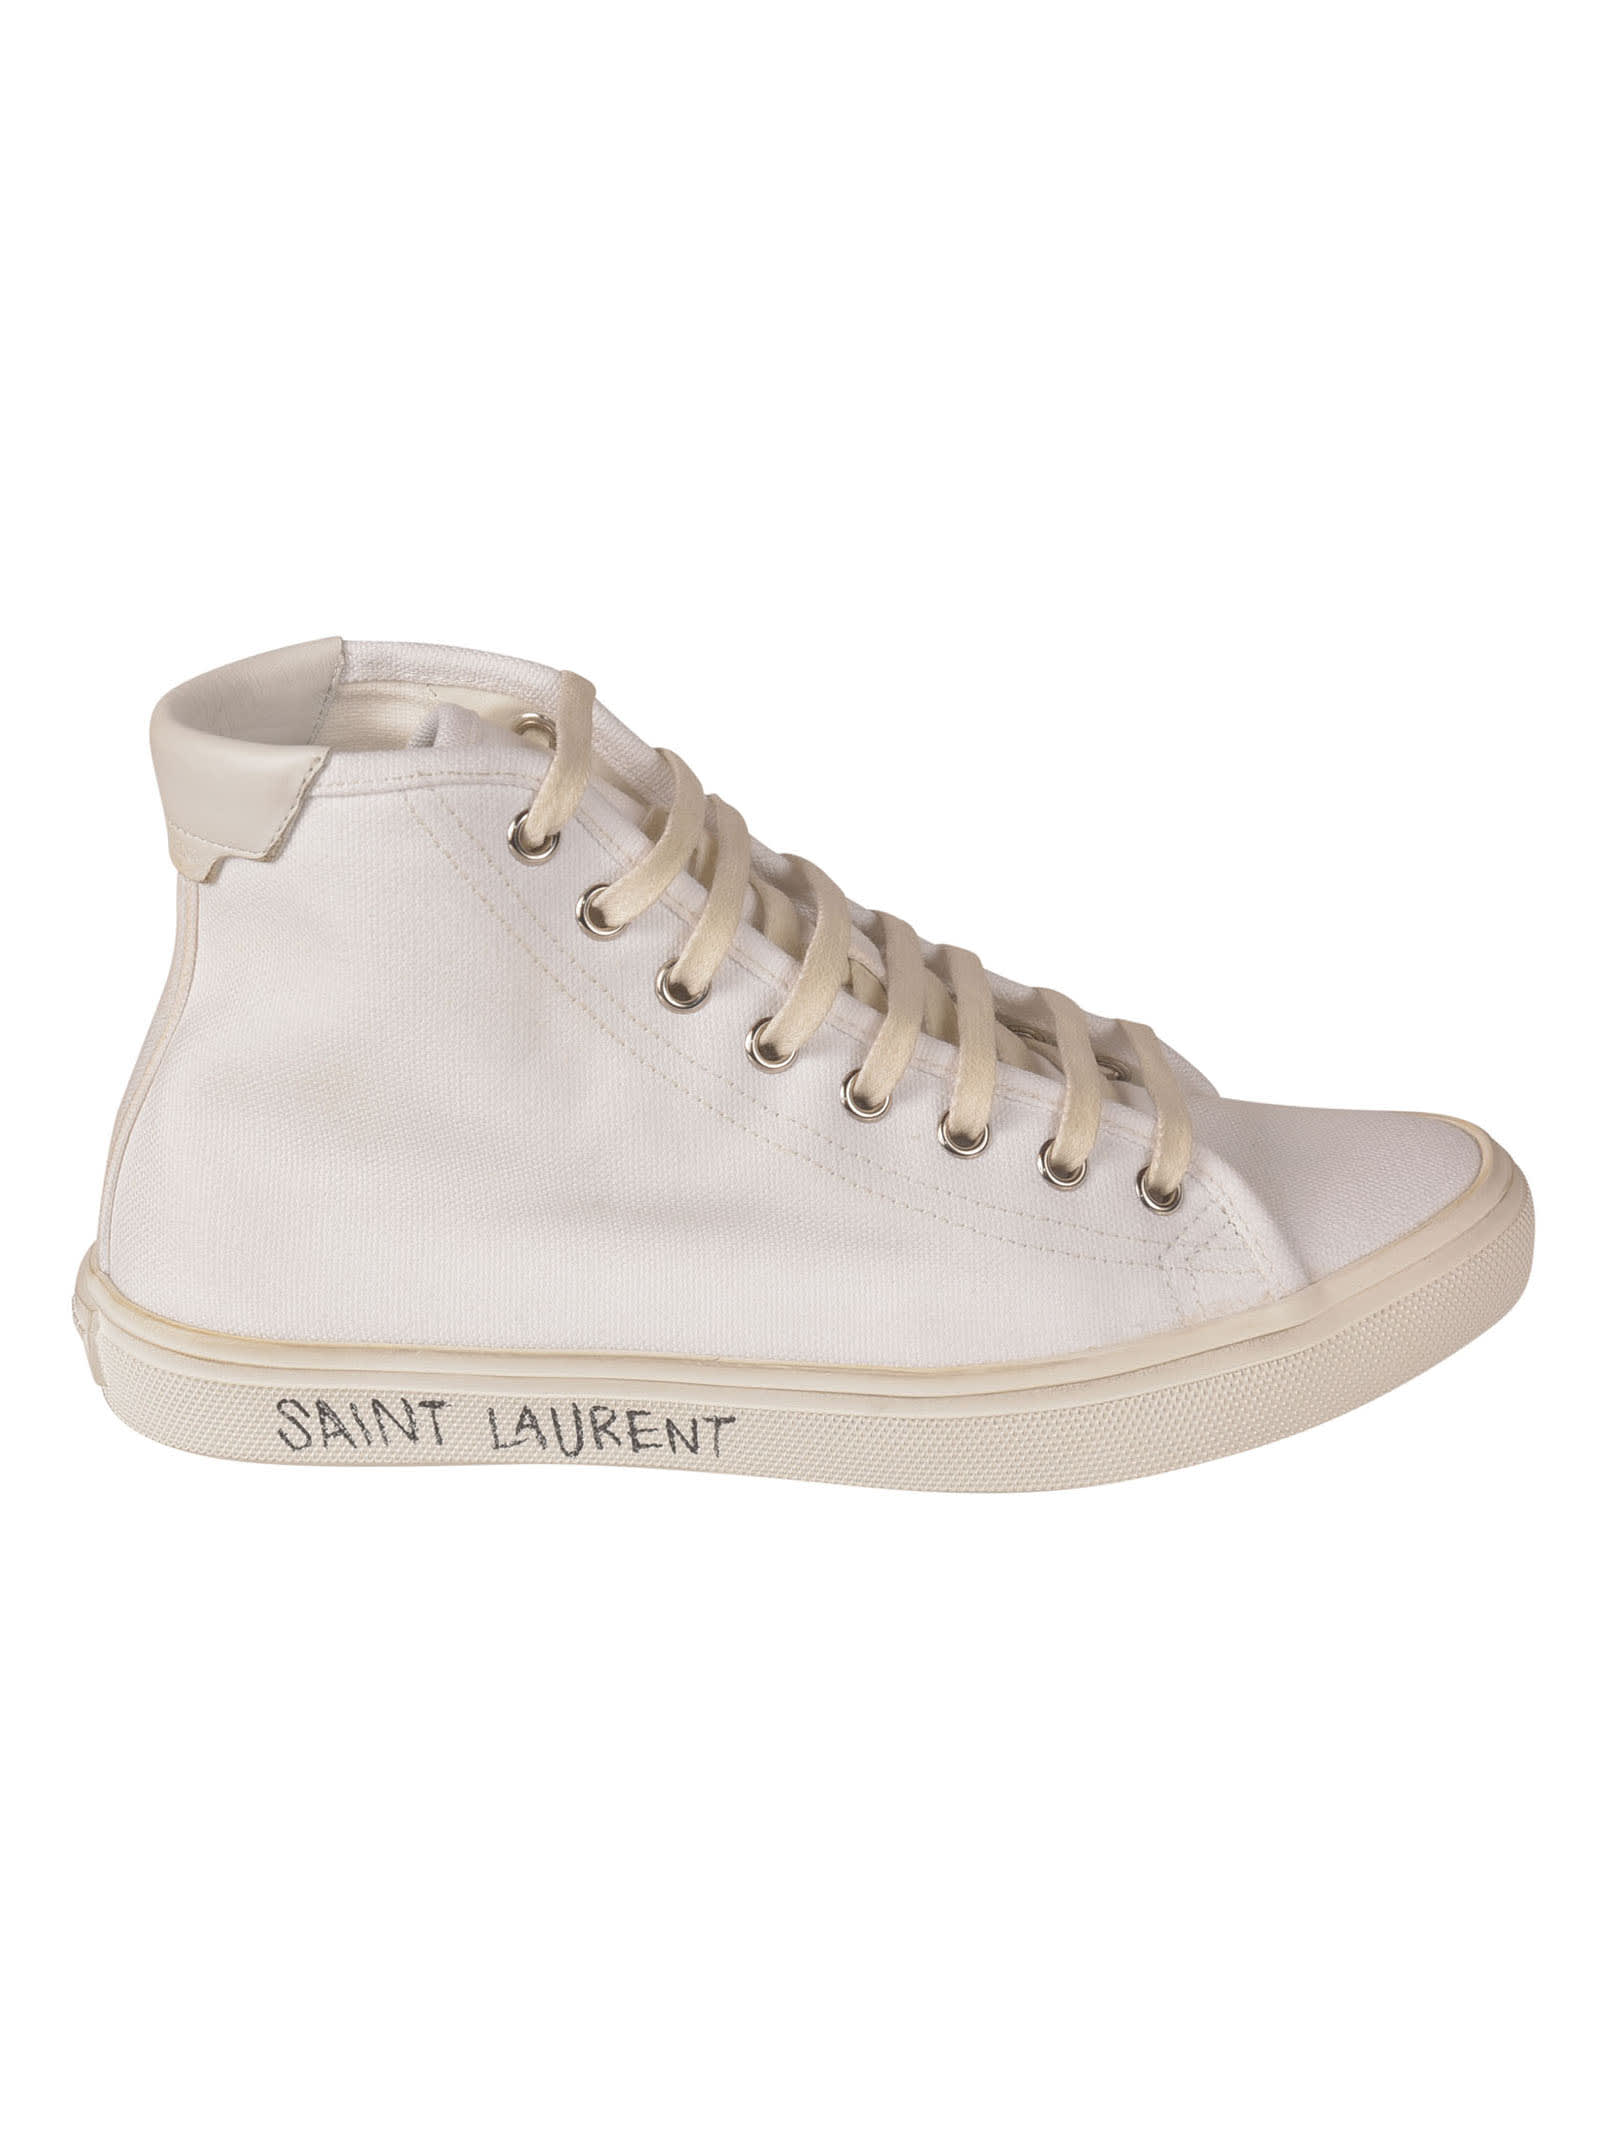 Saint Laurent Malibu Mid Sneakers